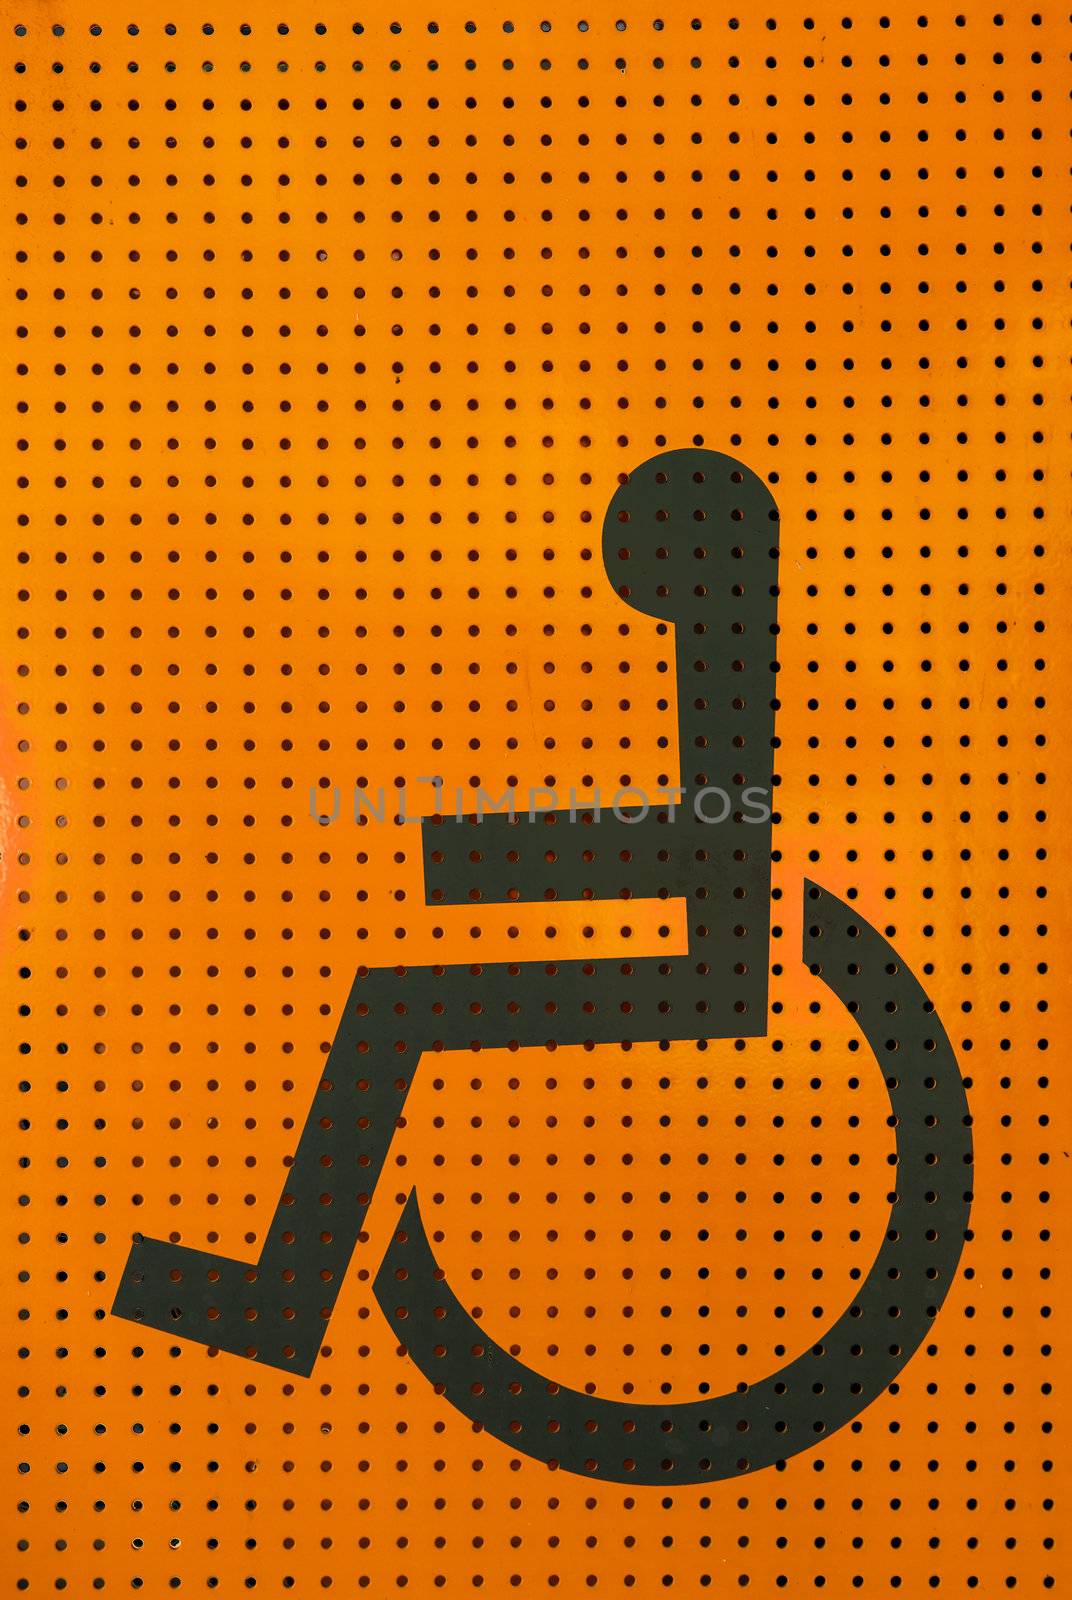 sign disabled icon on orange grating metal